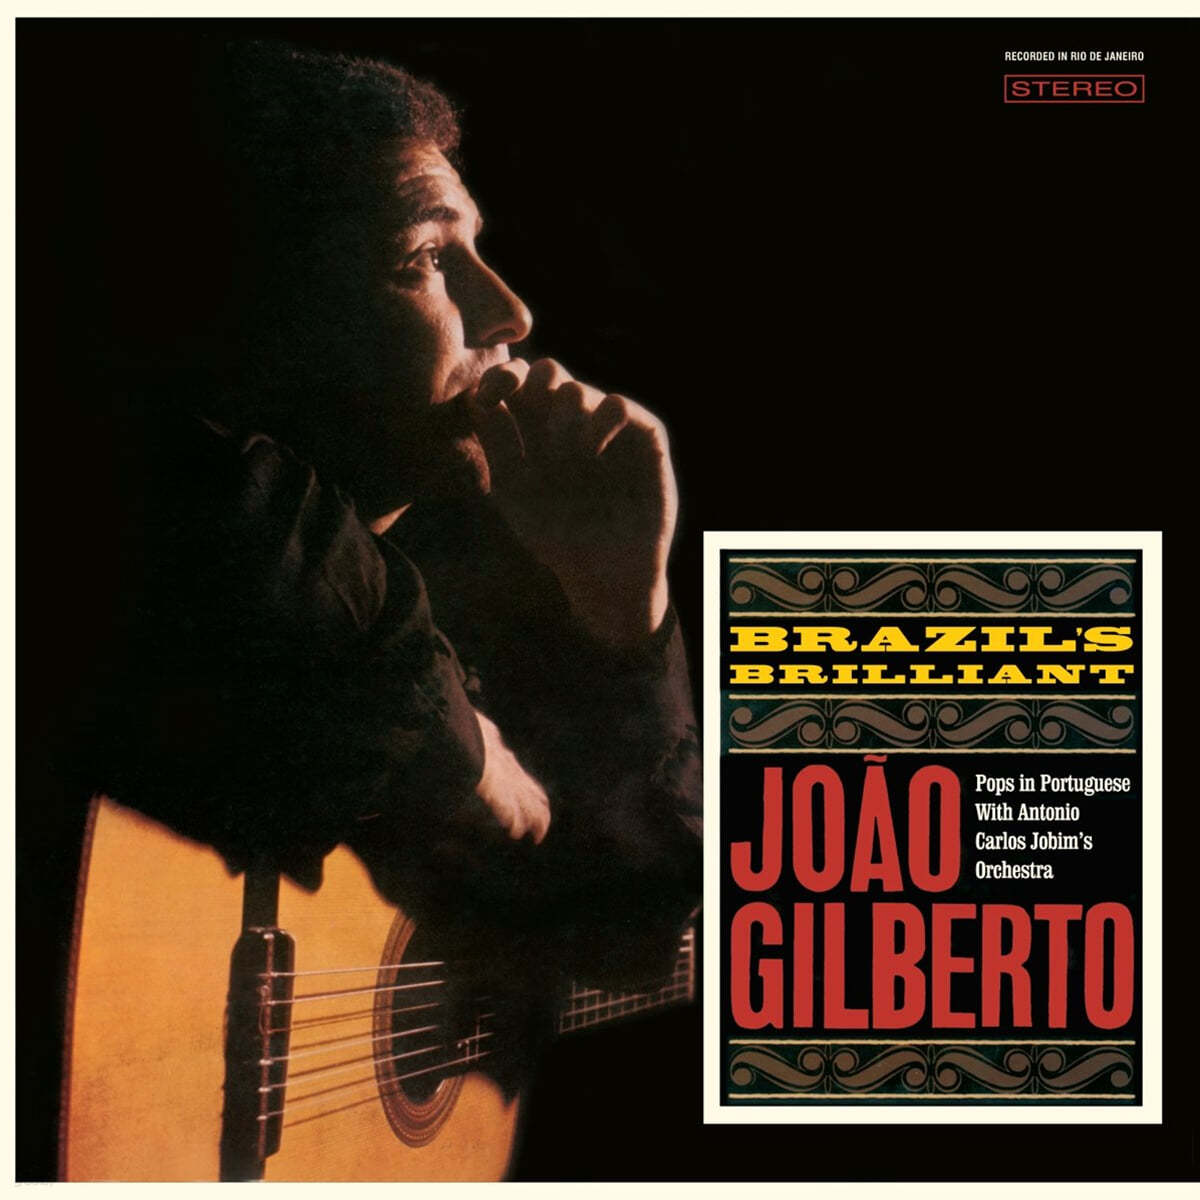 Joao Gilberto (주앙 질베르토) - Brazil's Brilliant [LP] 